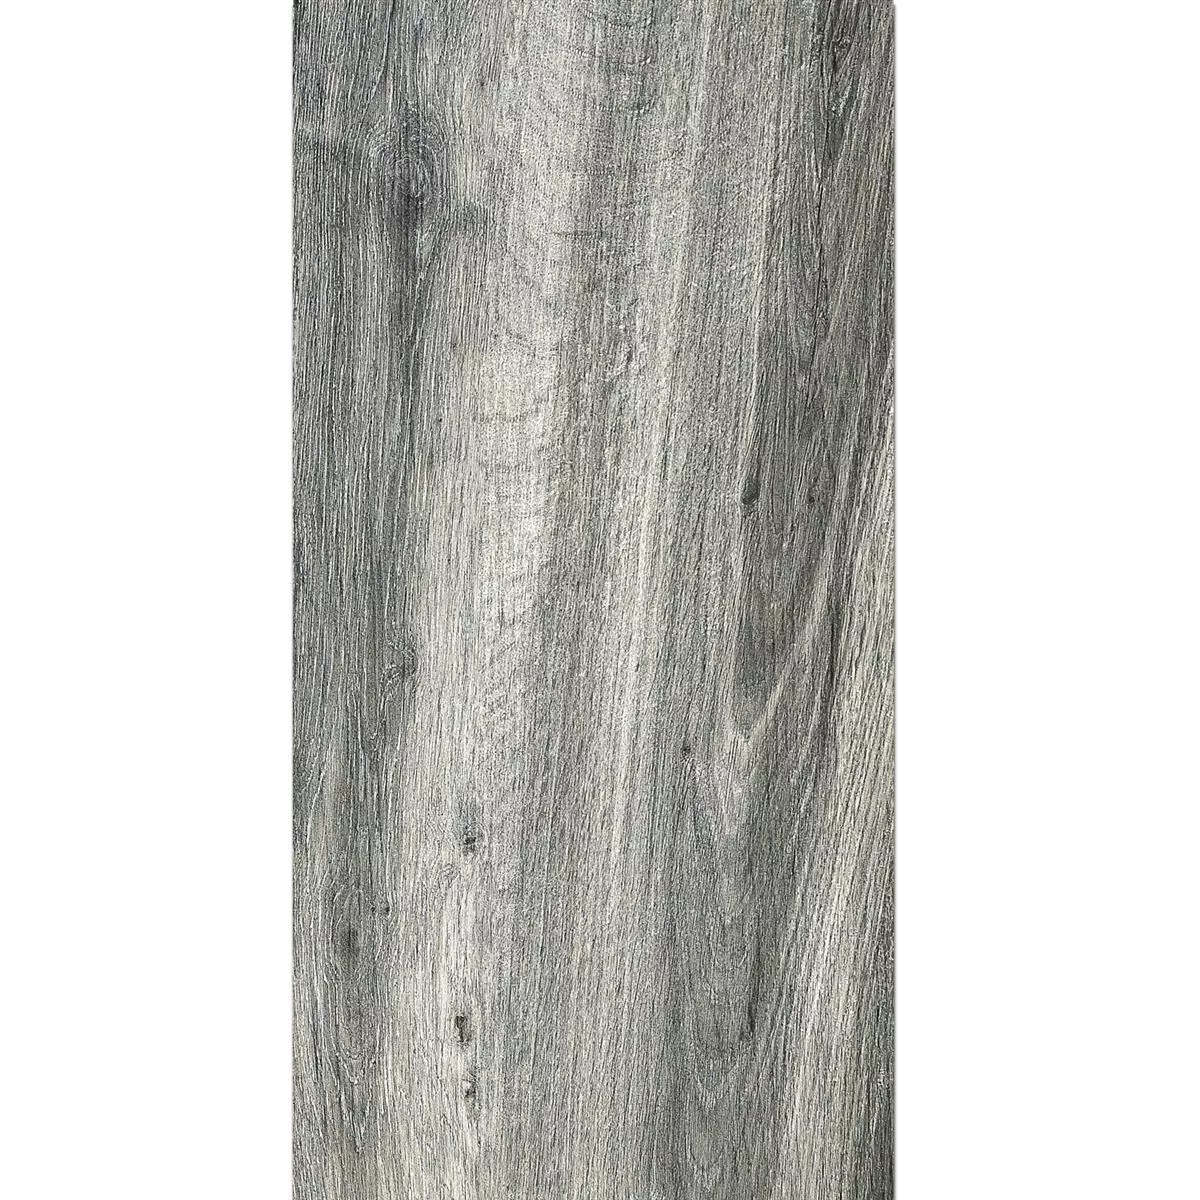 Prov Terass Klinker Starwood Träimitation Grey 45x90cm